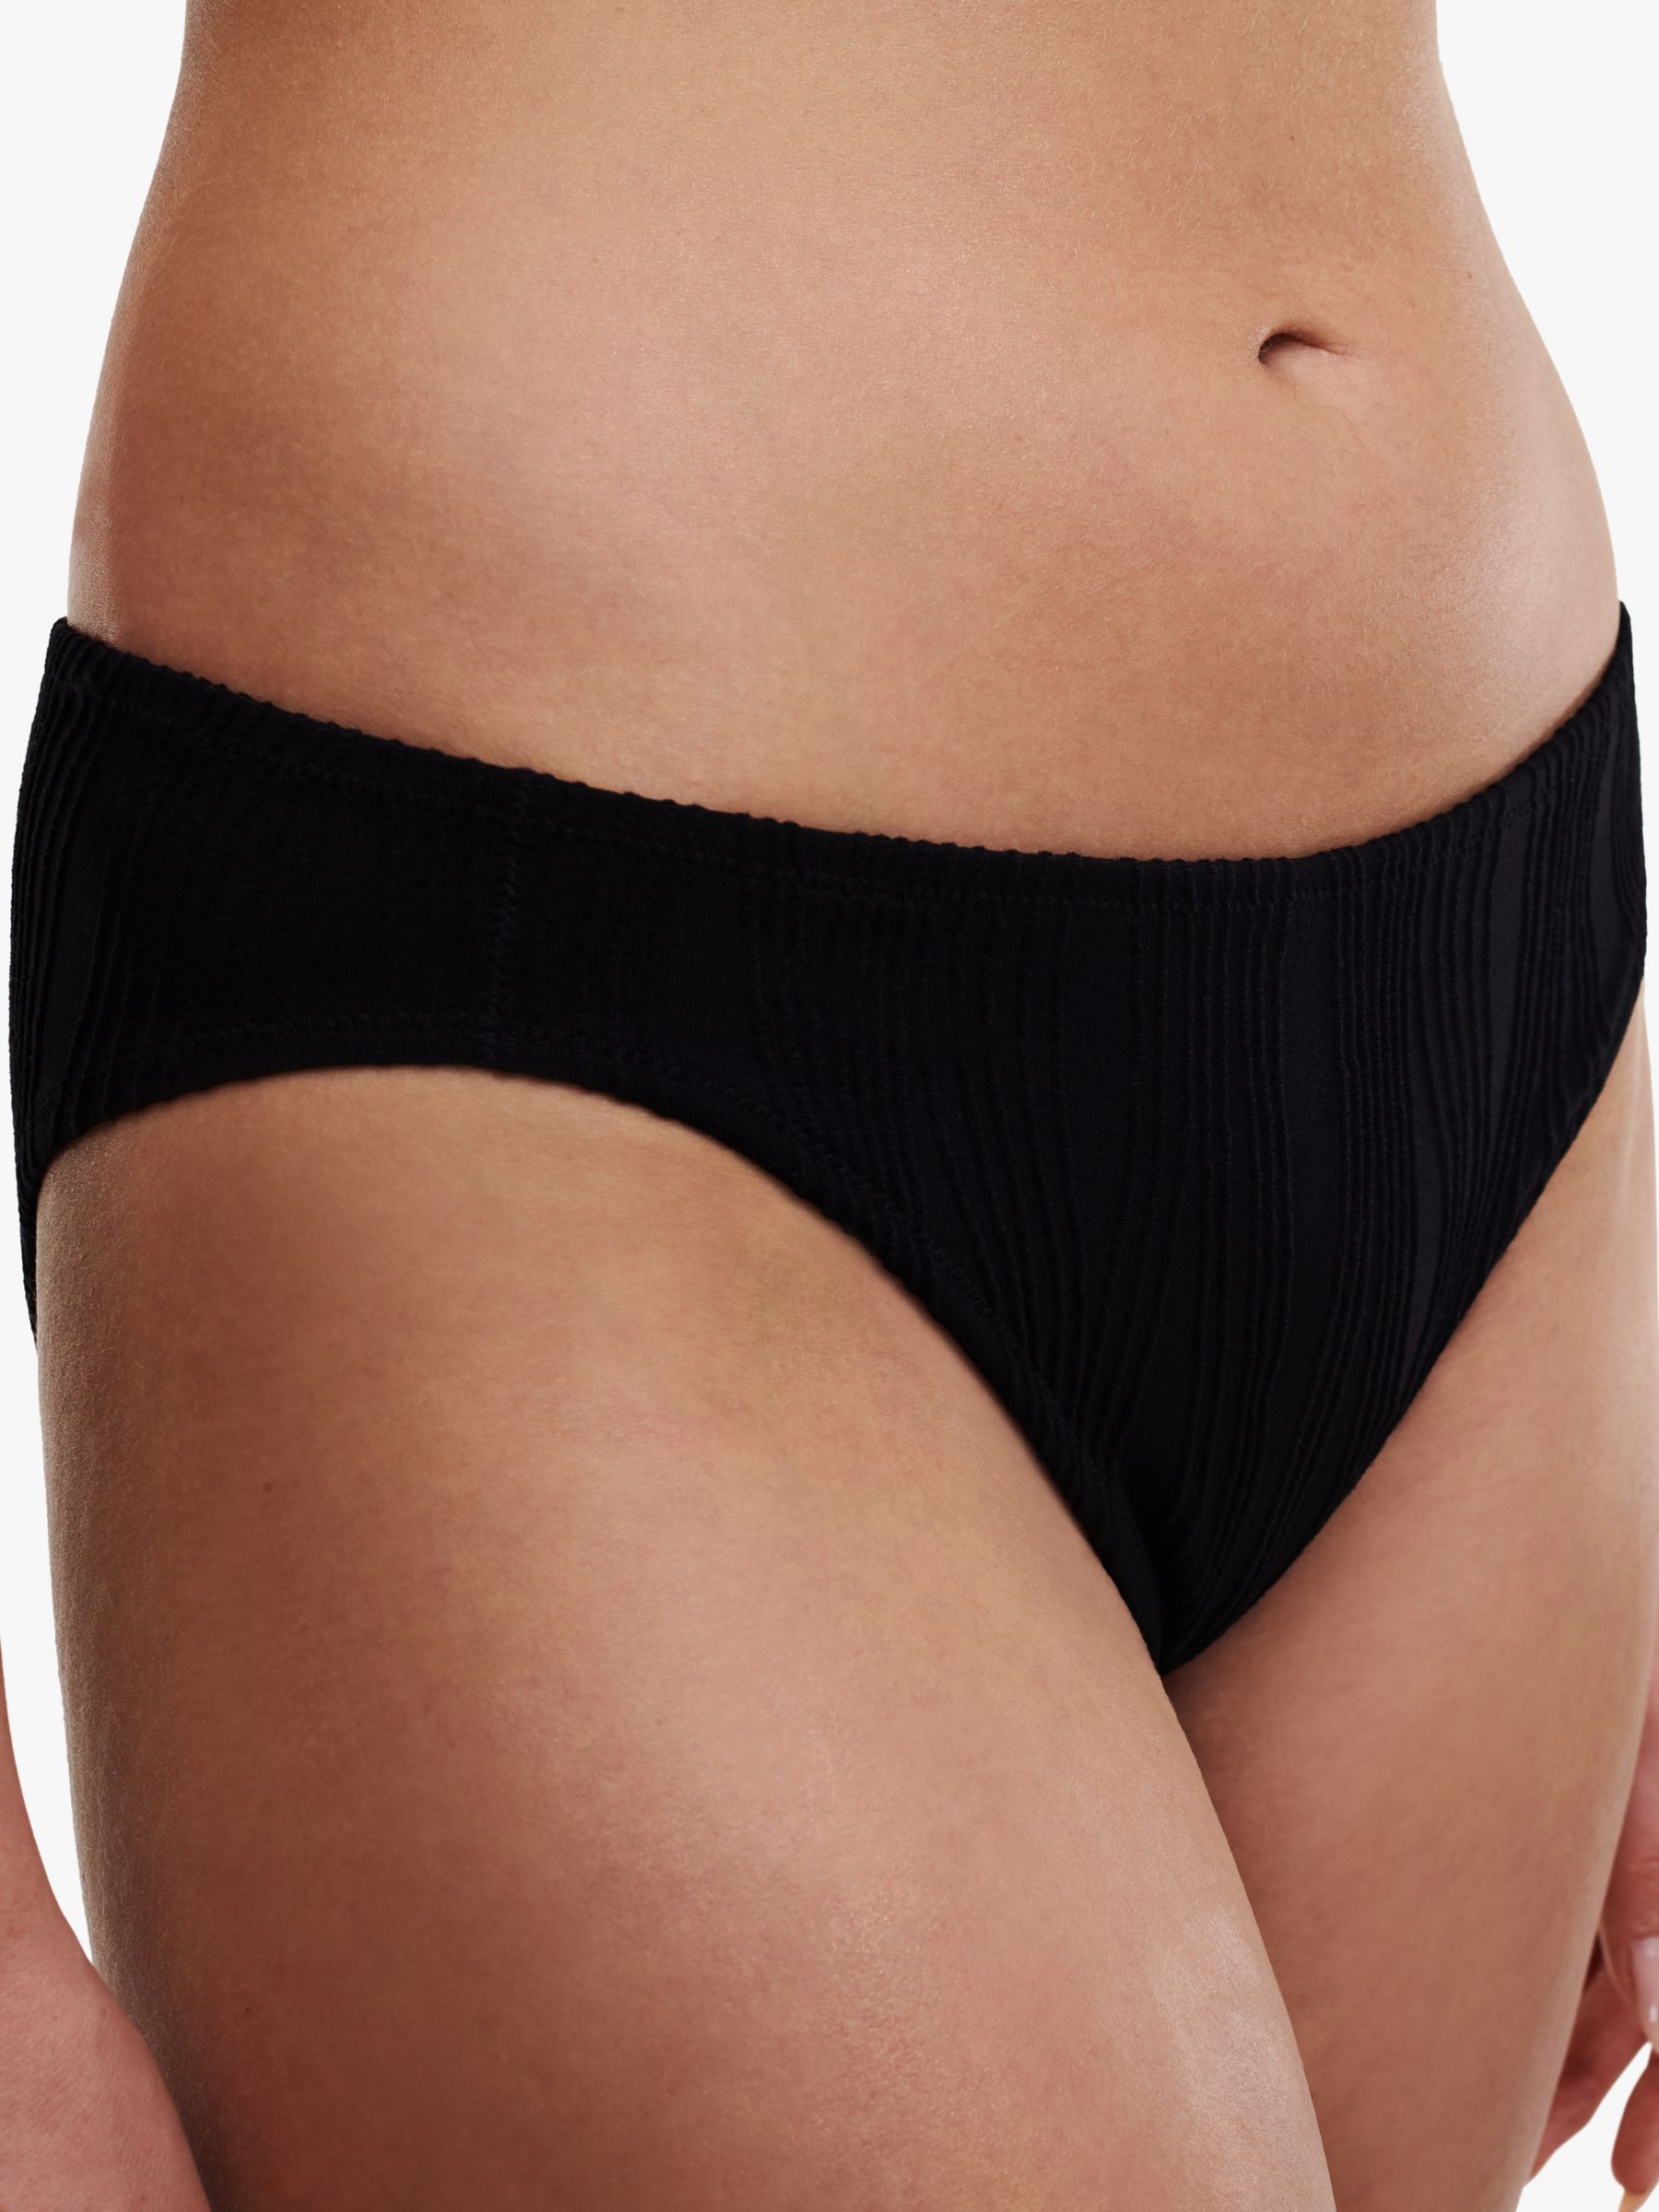 Chantelle Pulp Swimwear Textured Bikini Bottoms, Black, One Size